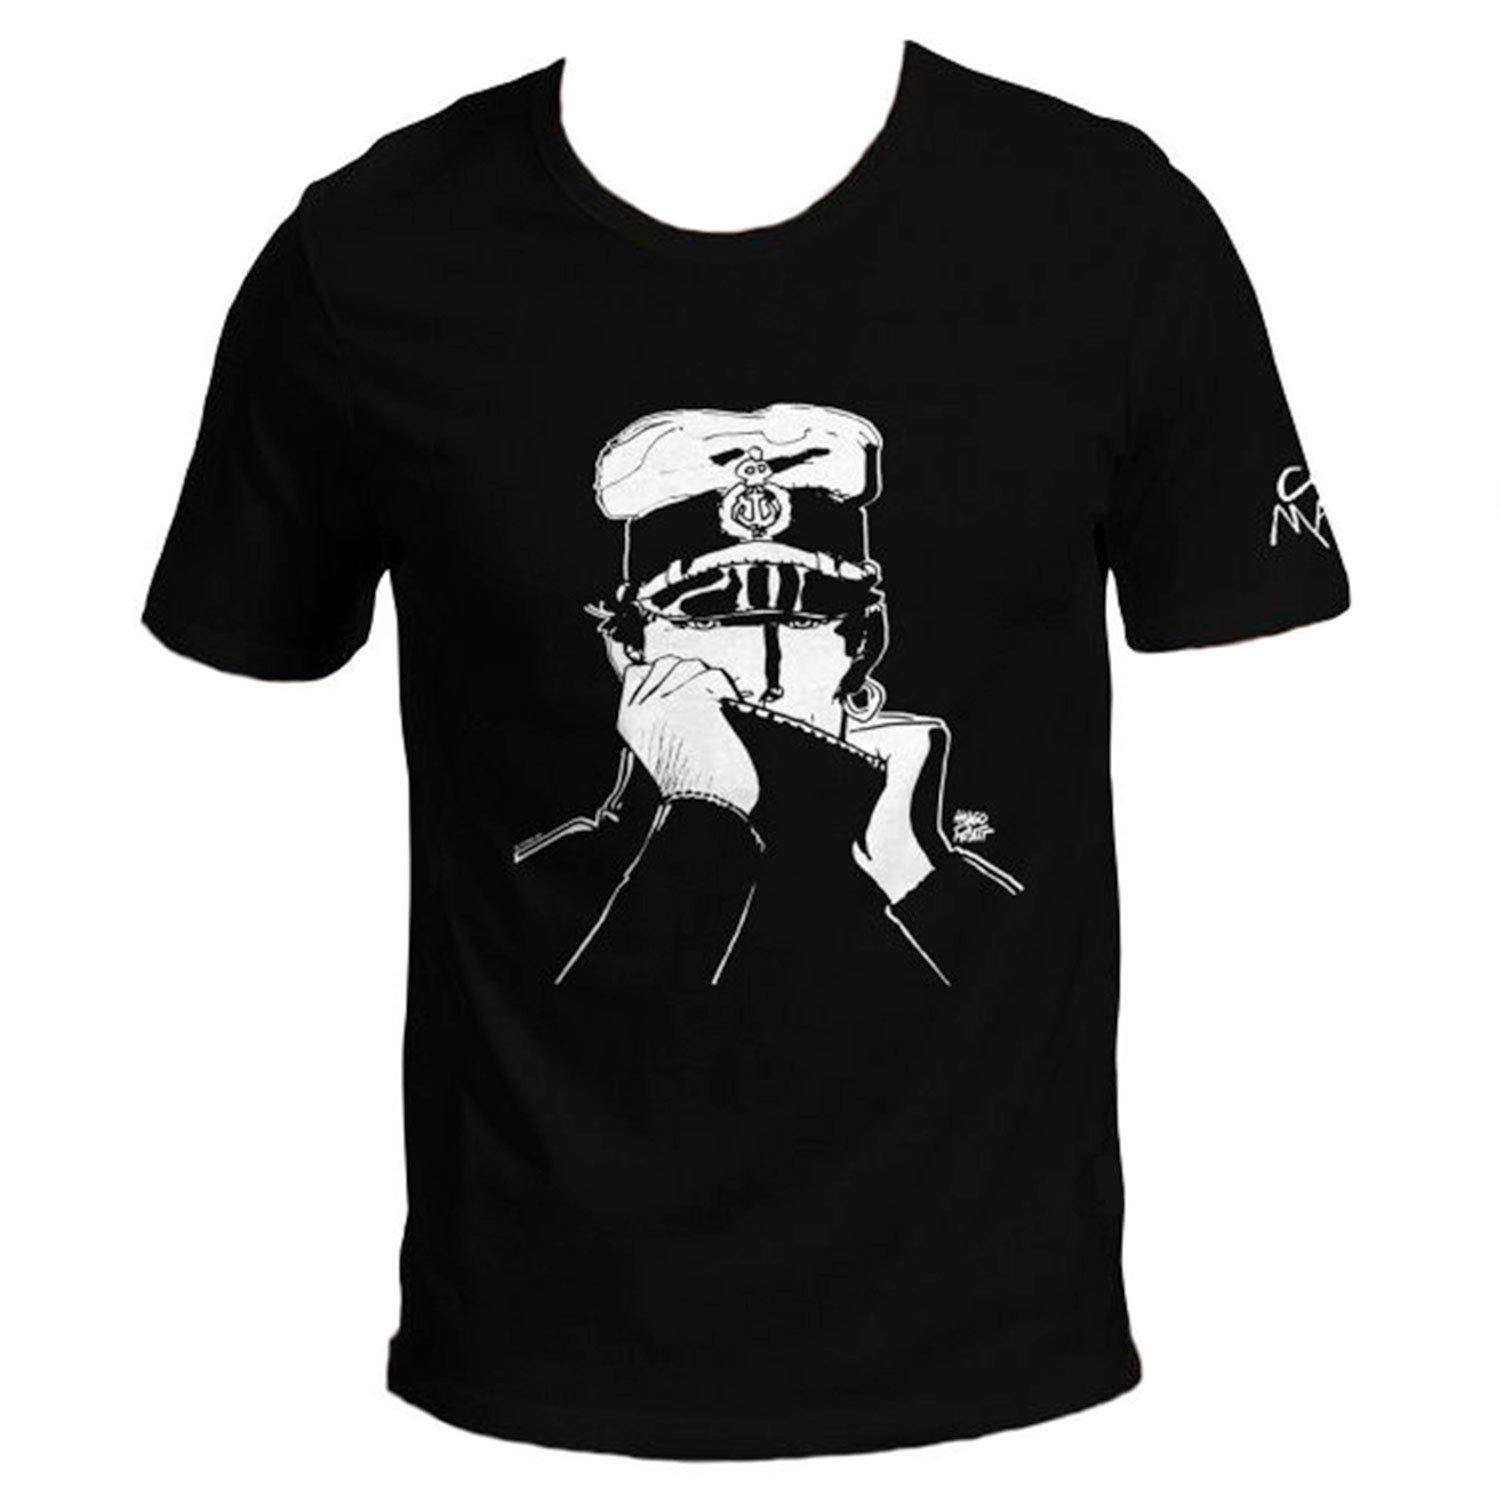 T-shirt Hugo Pratt : Corto Maltese , Le Marin (noir)